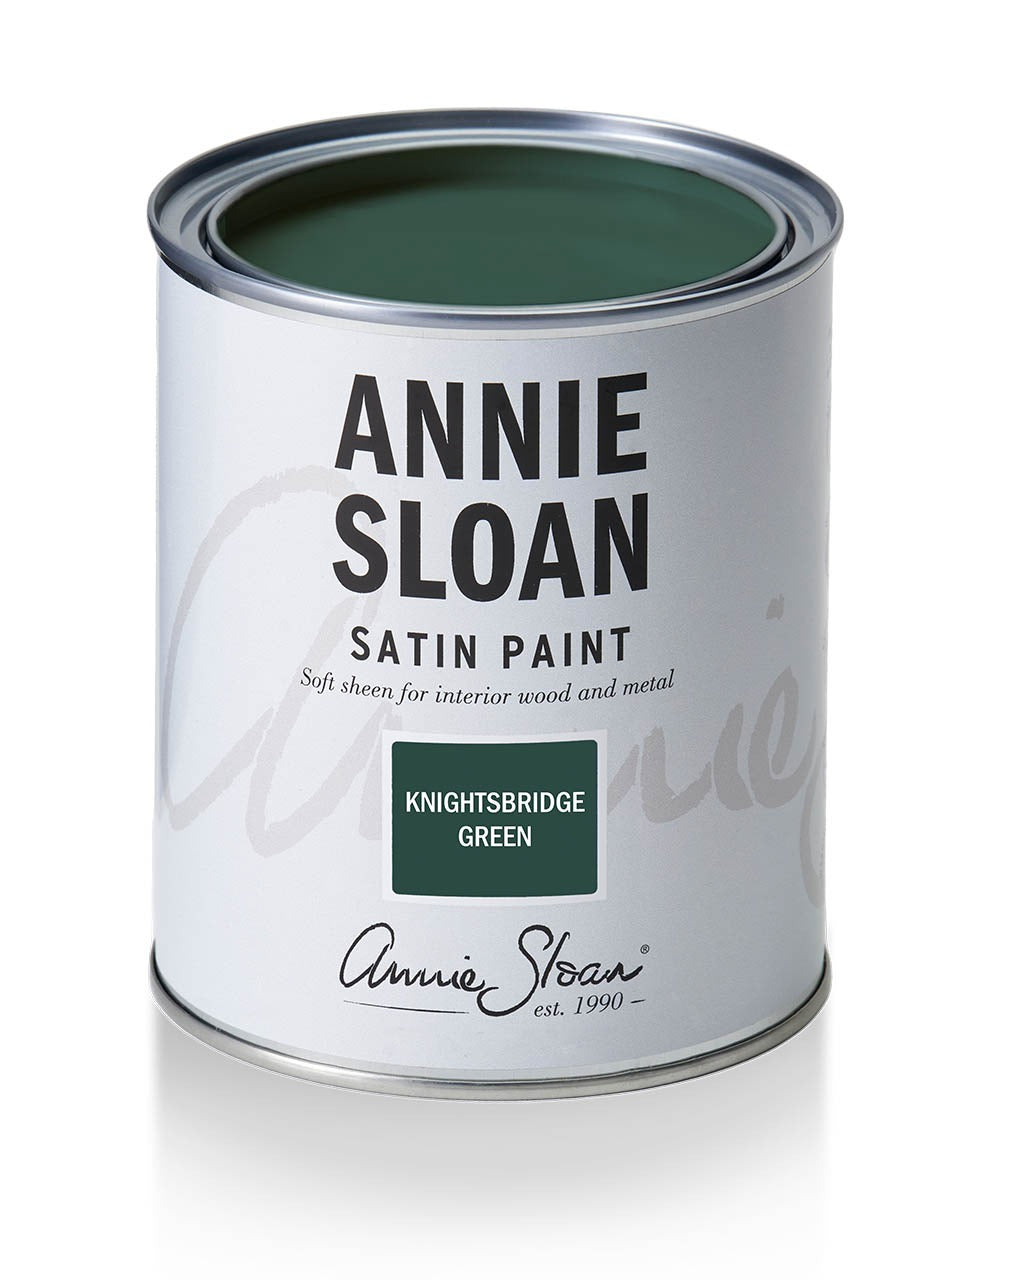 Knightsbridge Satin Paint by Annie Sloan